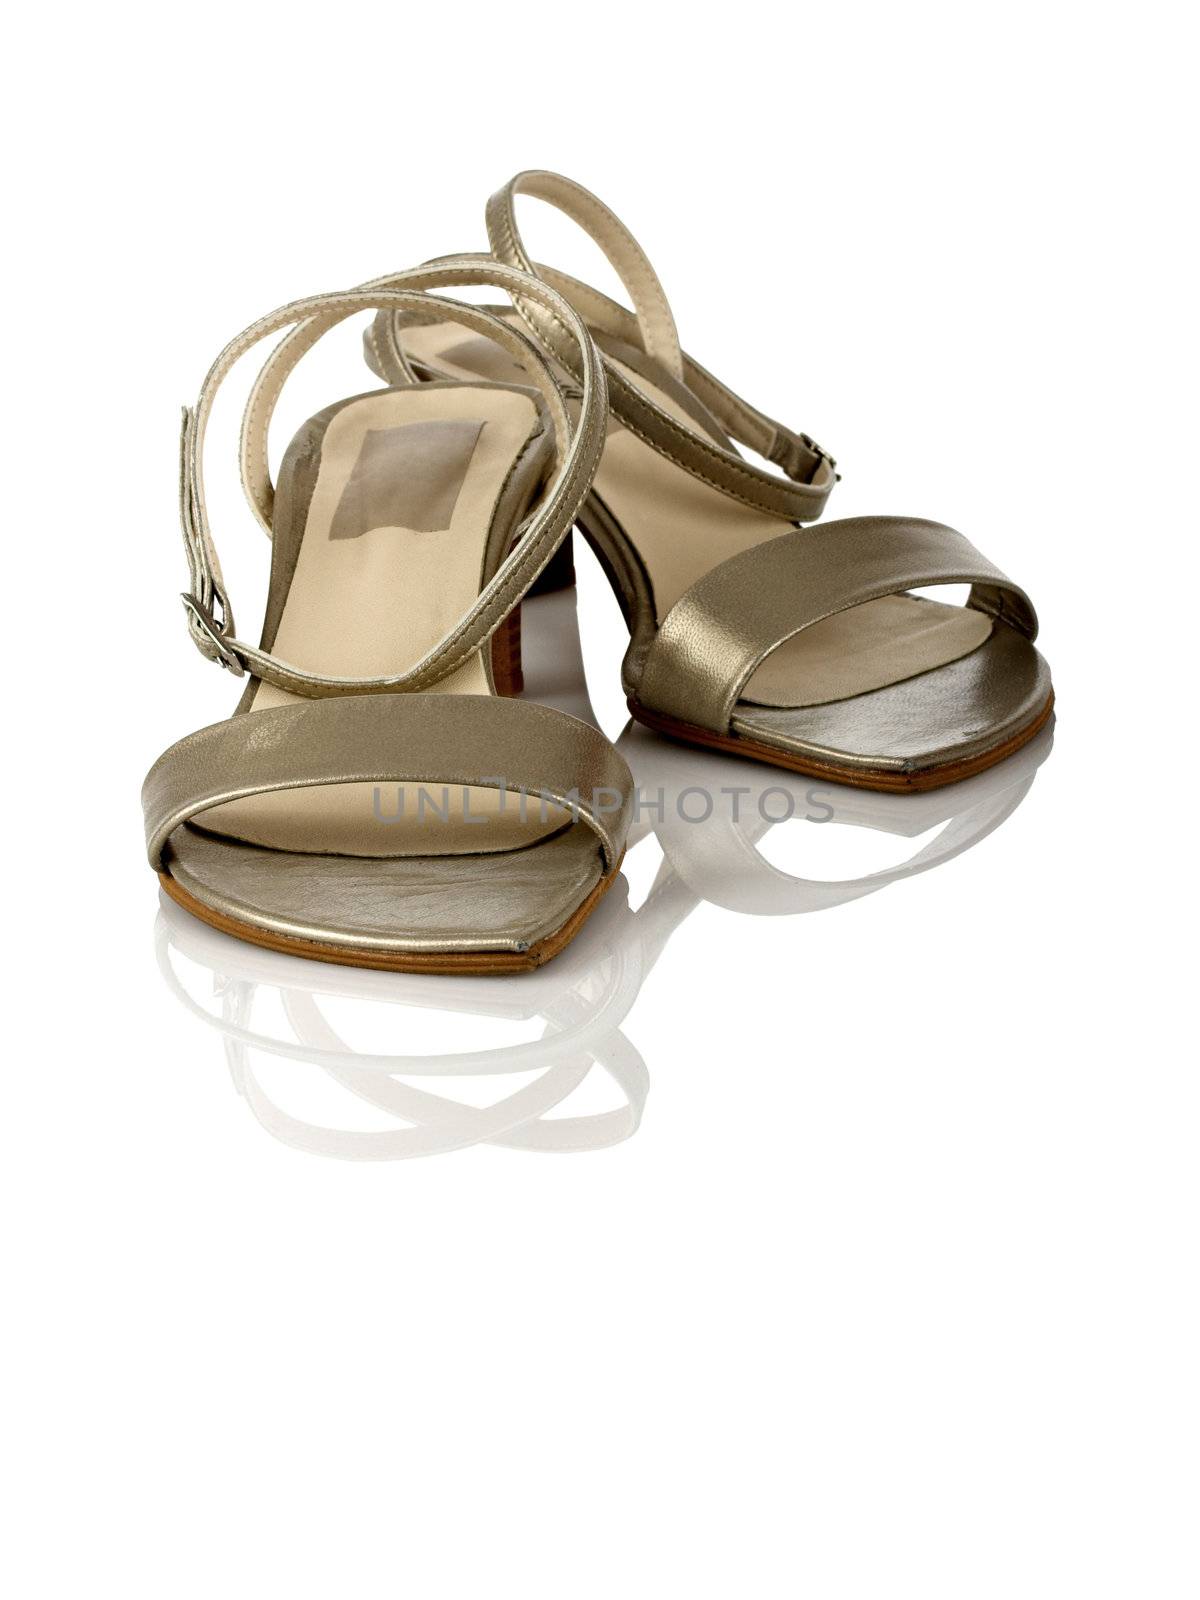 Beautiful feminine sandals on white with reflection